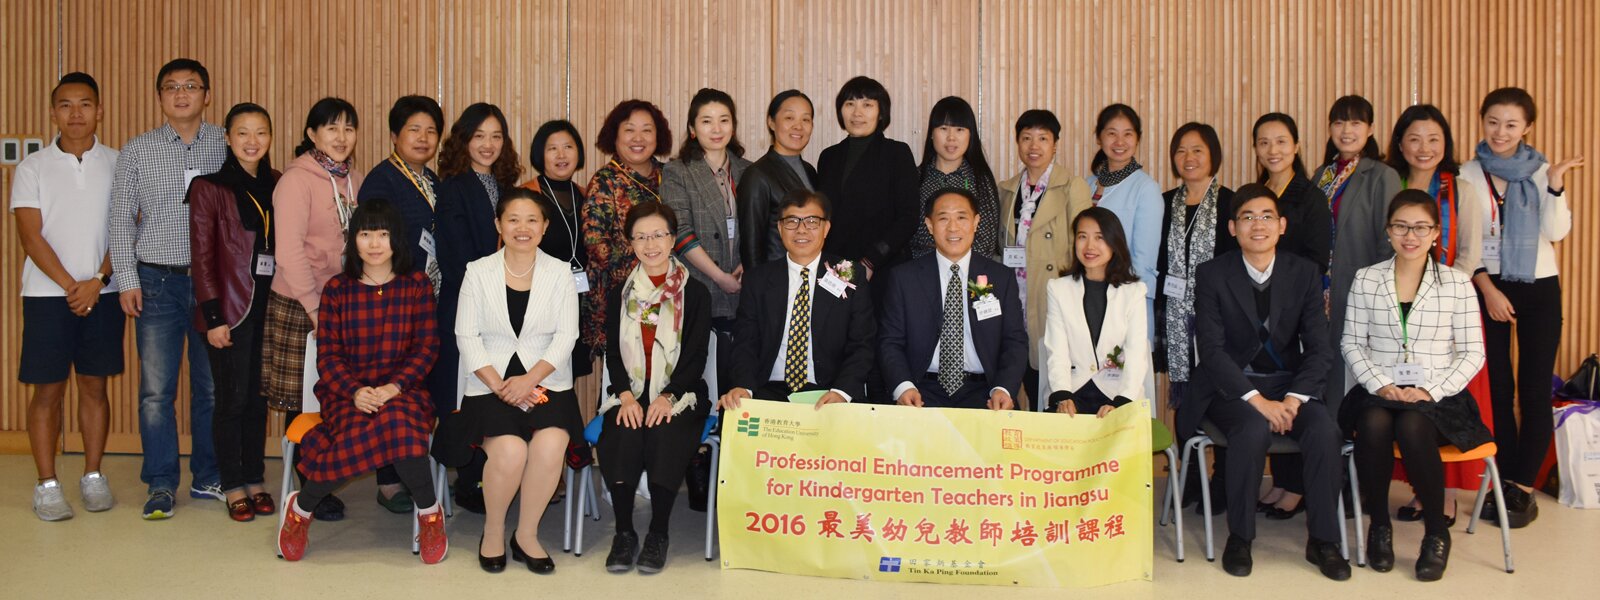 Professional Enhancement Programme for Kindergarten Teachers in Jiangsu